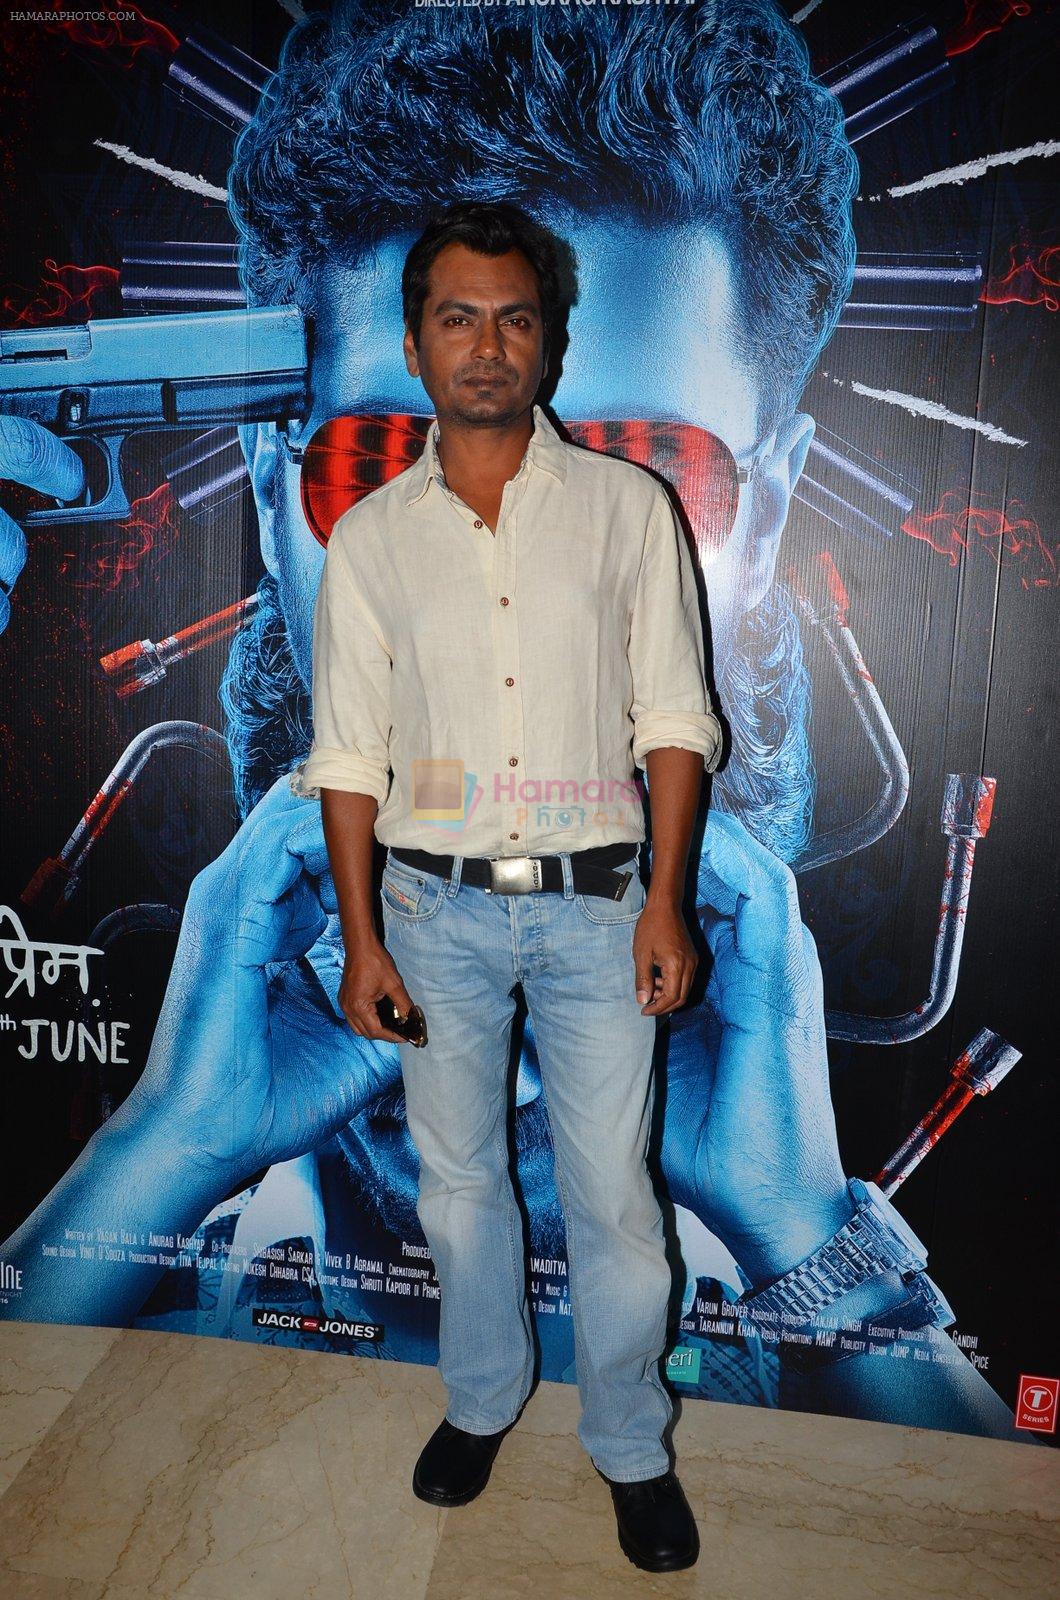 Nawazuddin Siddiqui at the Trailer launch of Raman Raghav 2.0 in Mumbai on 10th May 2016